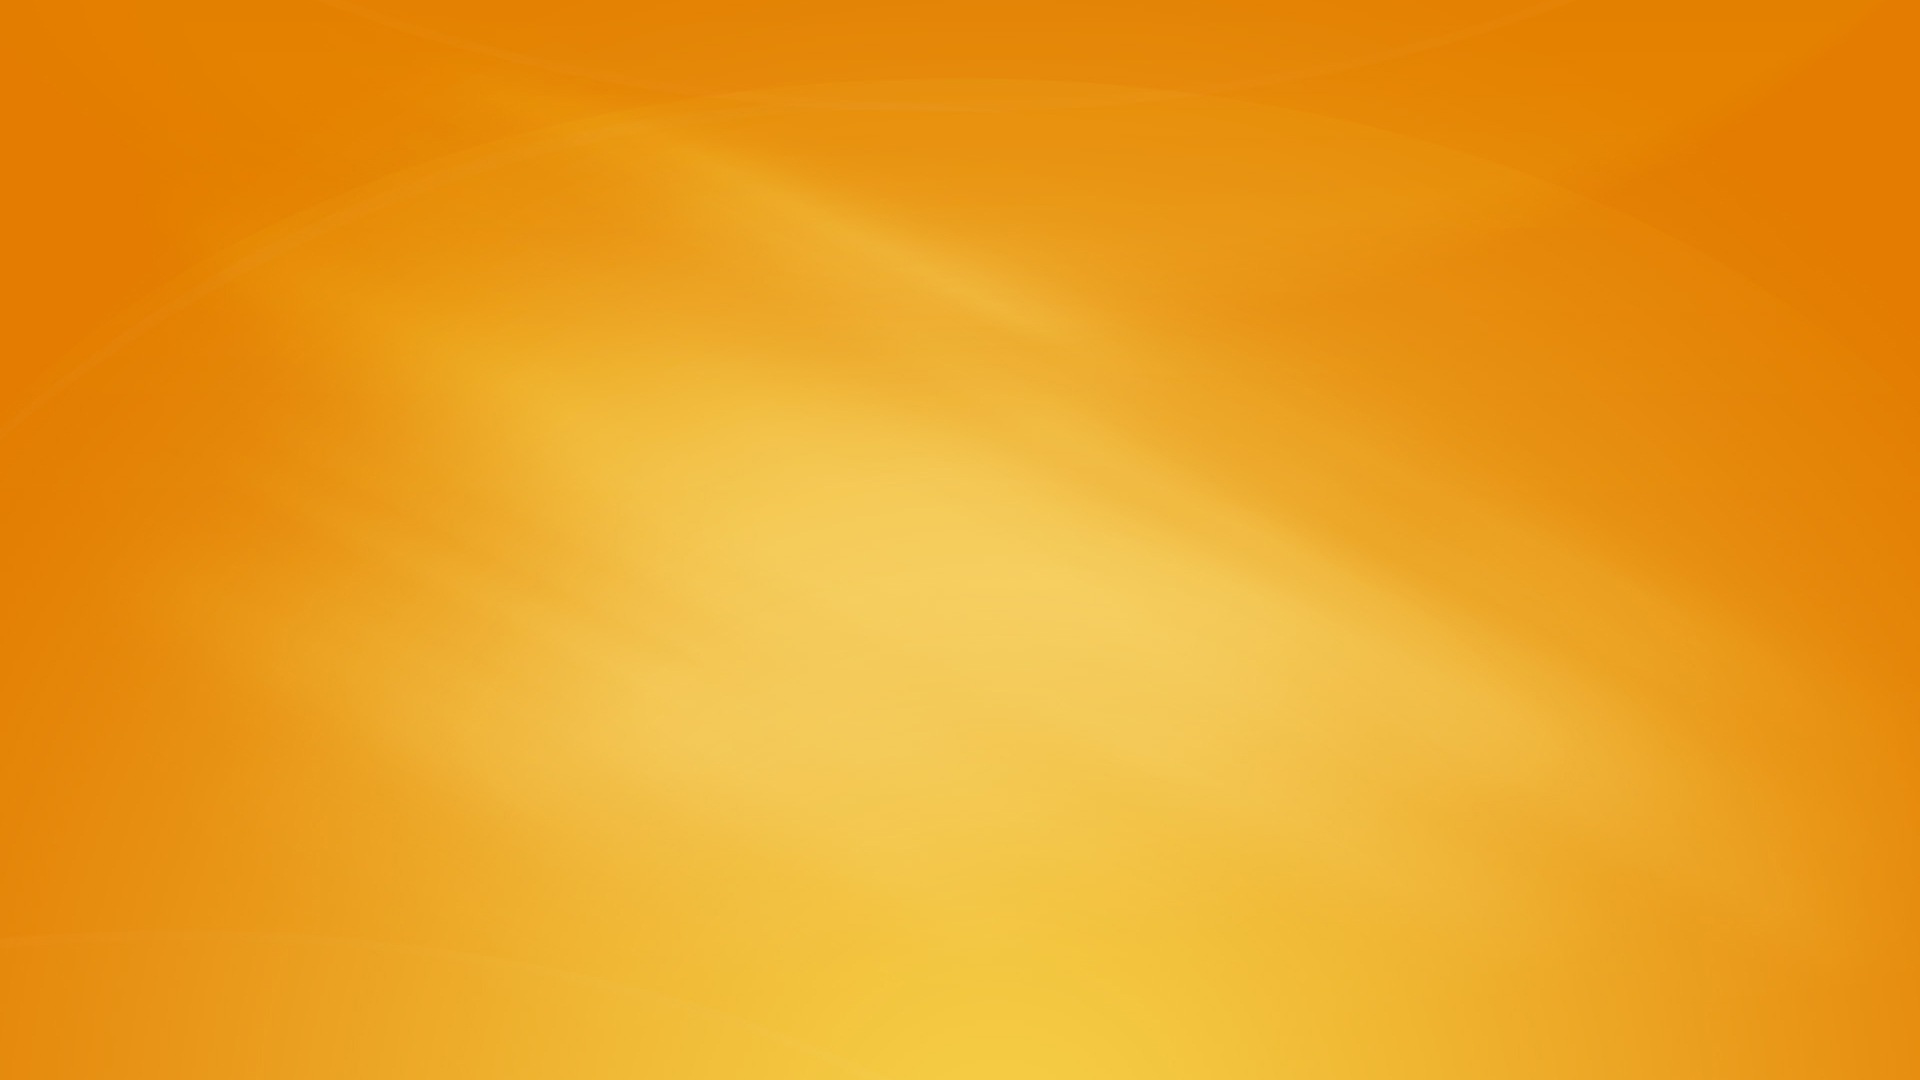 11100 Light Orange Background Illustrations RoyaltyFree Vector Graphics   Clip Art  iStock  Light blue background